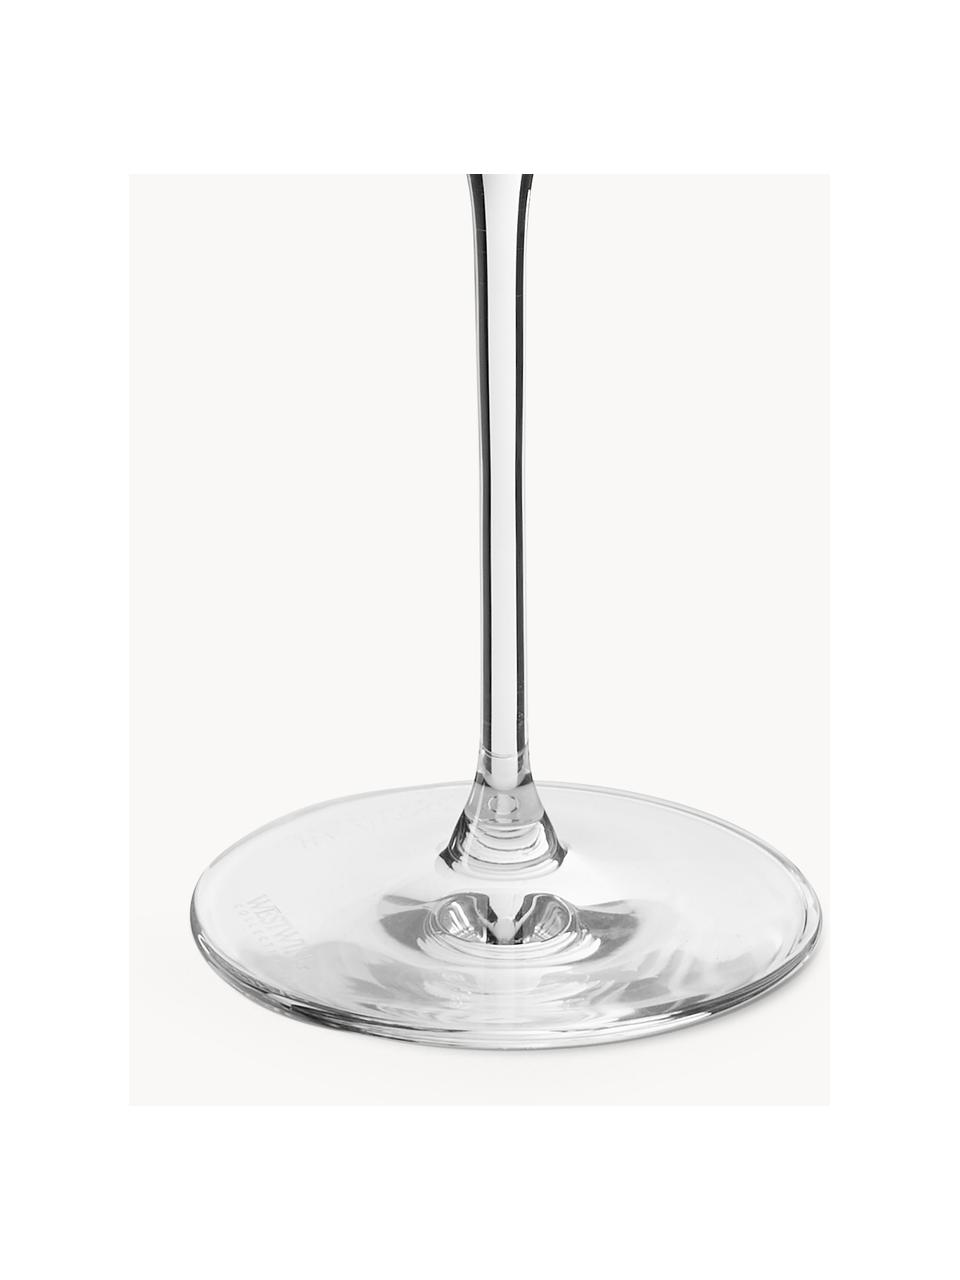 Weißweingläser Xavia aus Kristallglas, 4 Stück, Kristallglas, Transparent, Ø 7 x H 20 cm, 340 ml